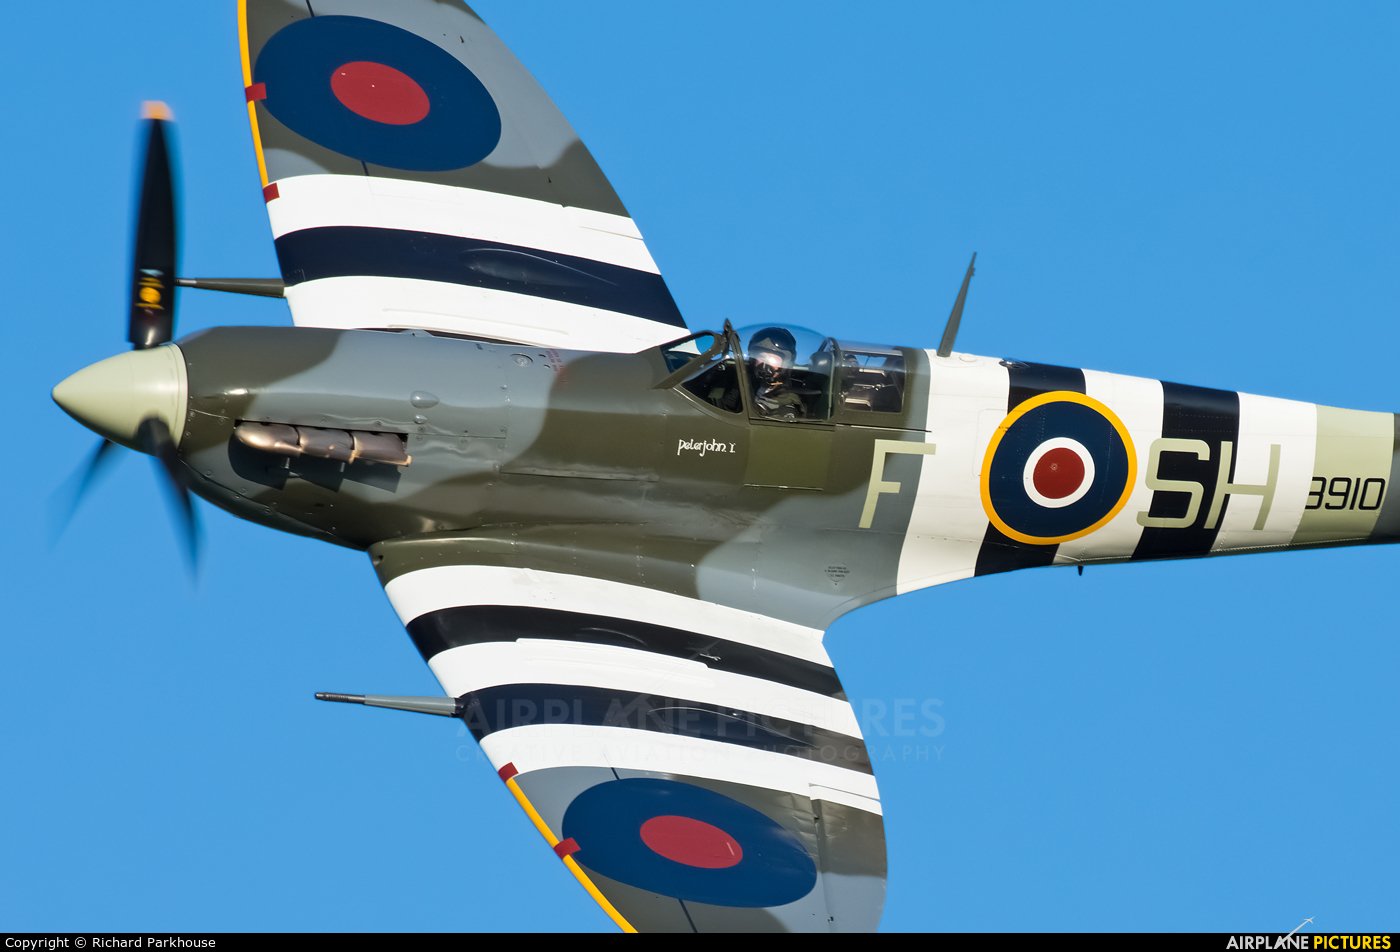 Royal Air Force "Battle of Britain Memorial Flight" AB910 aircraft at Old Warden